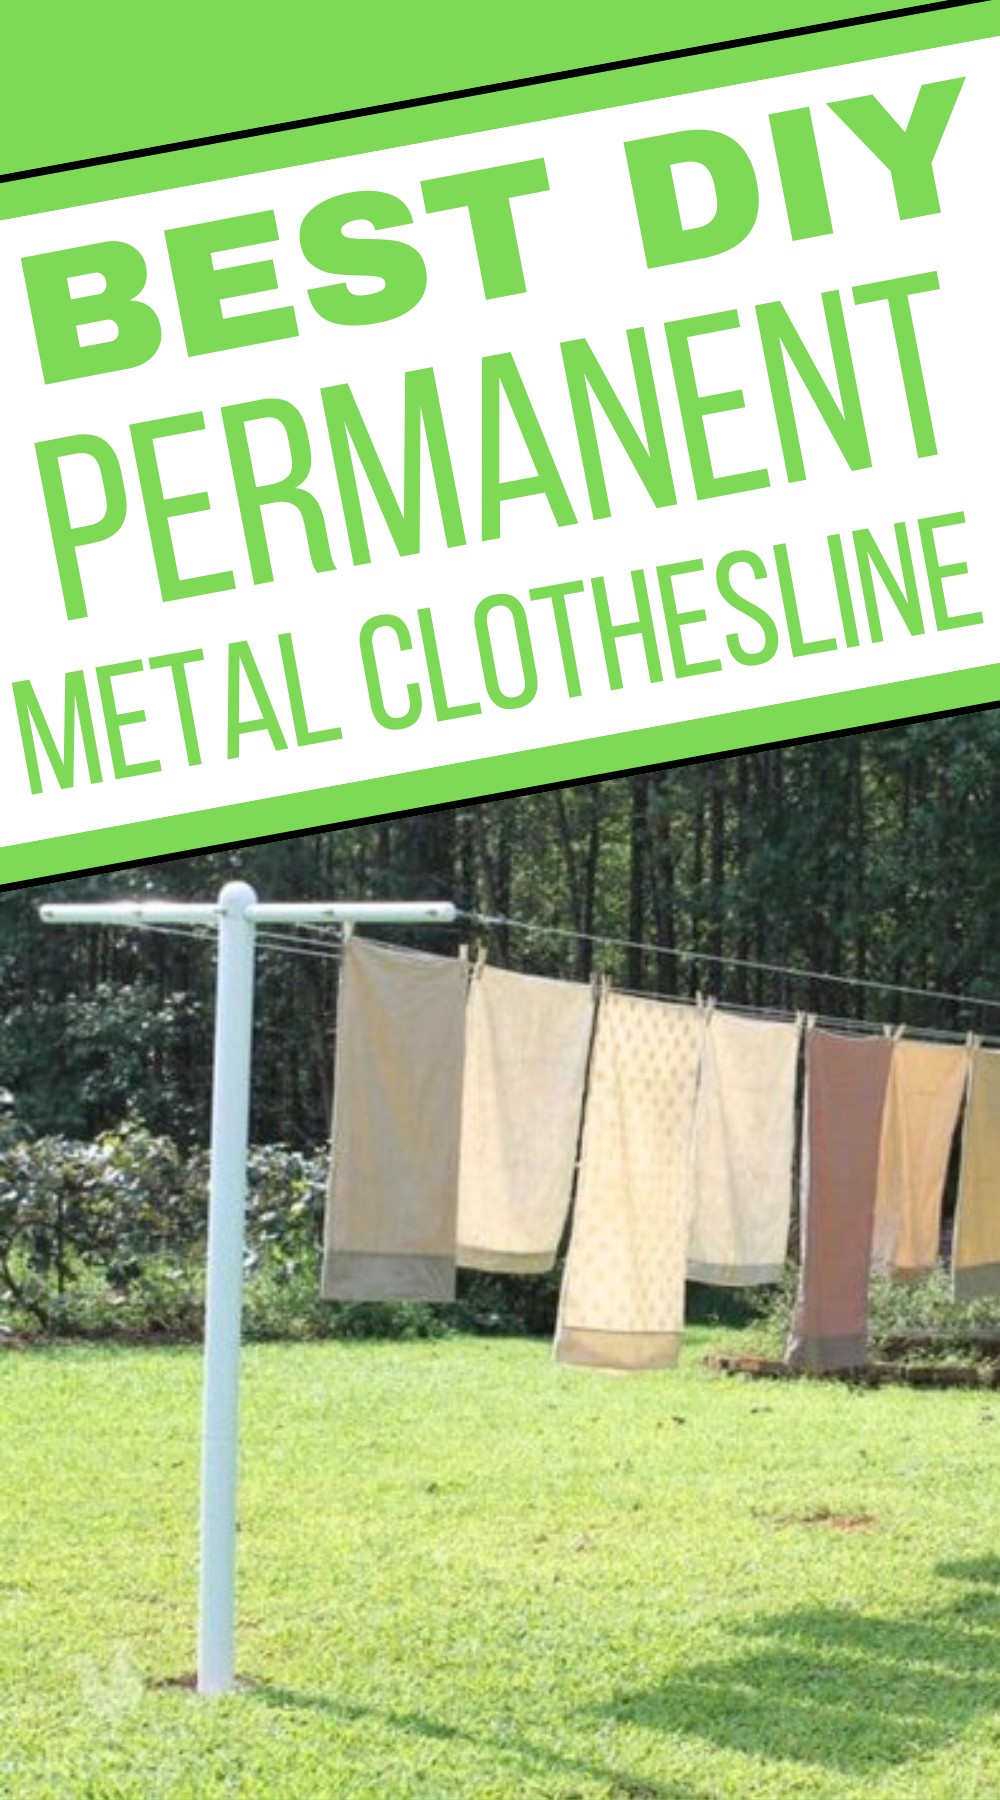 Permanent Metal Clothesline